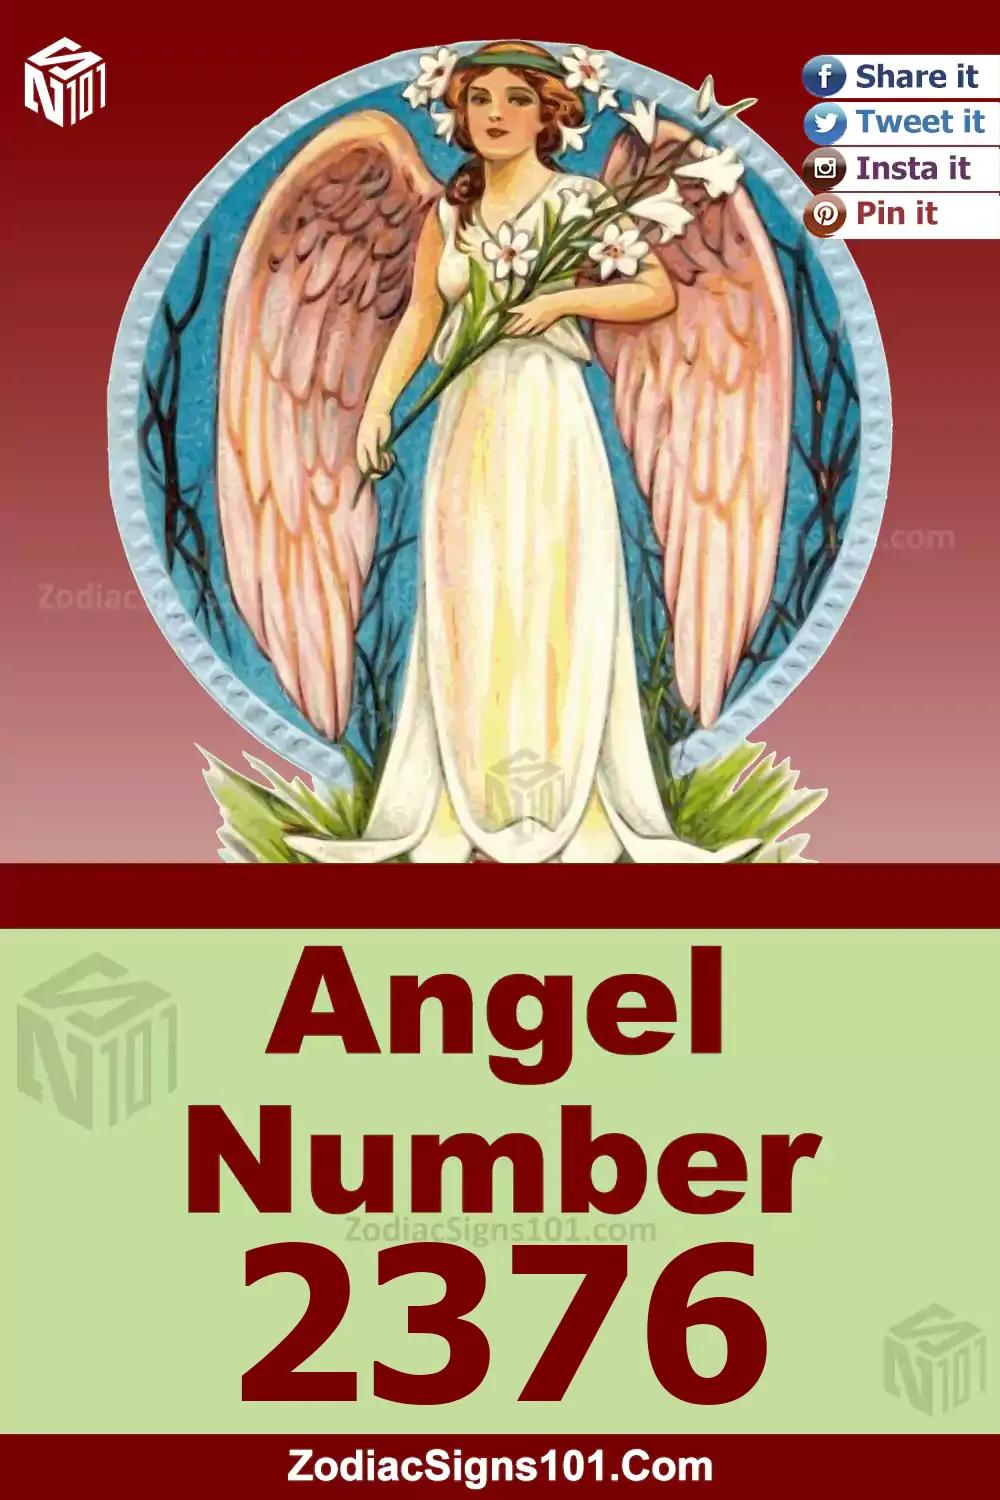 2376-Angel-Number-Meaning.jpg